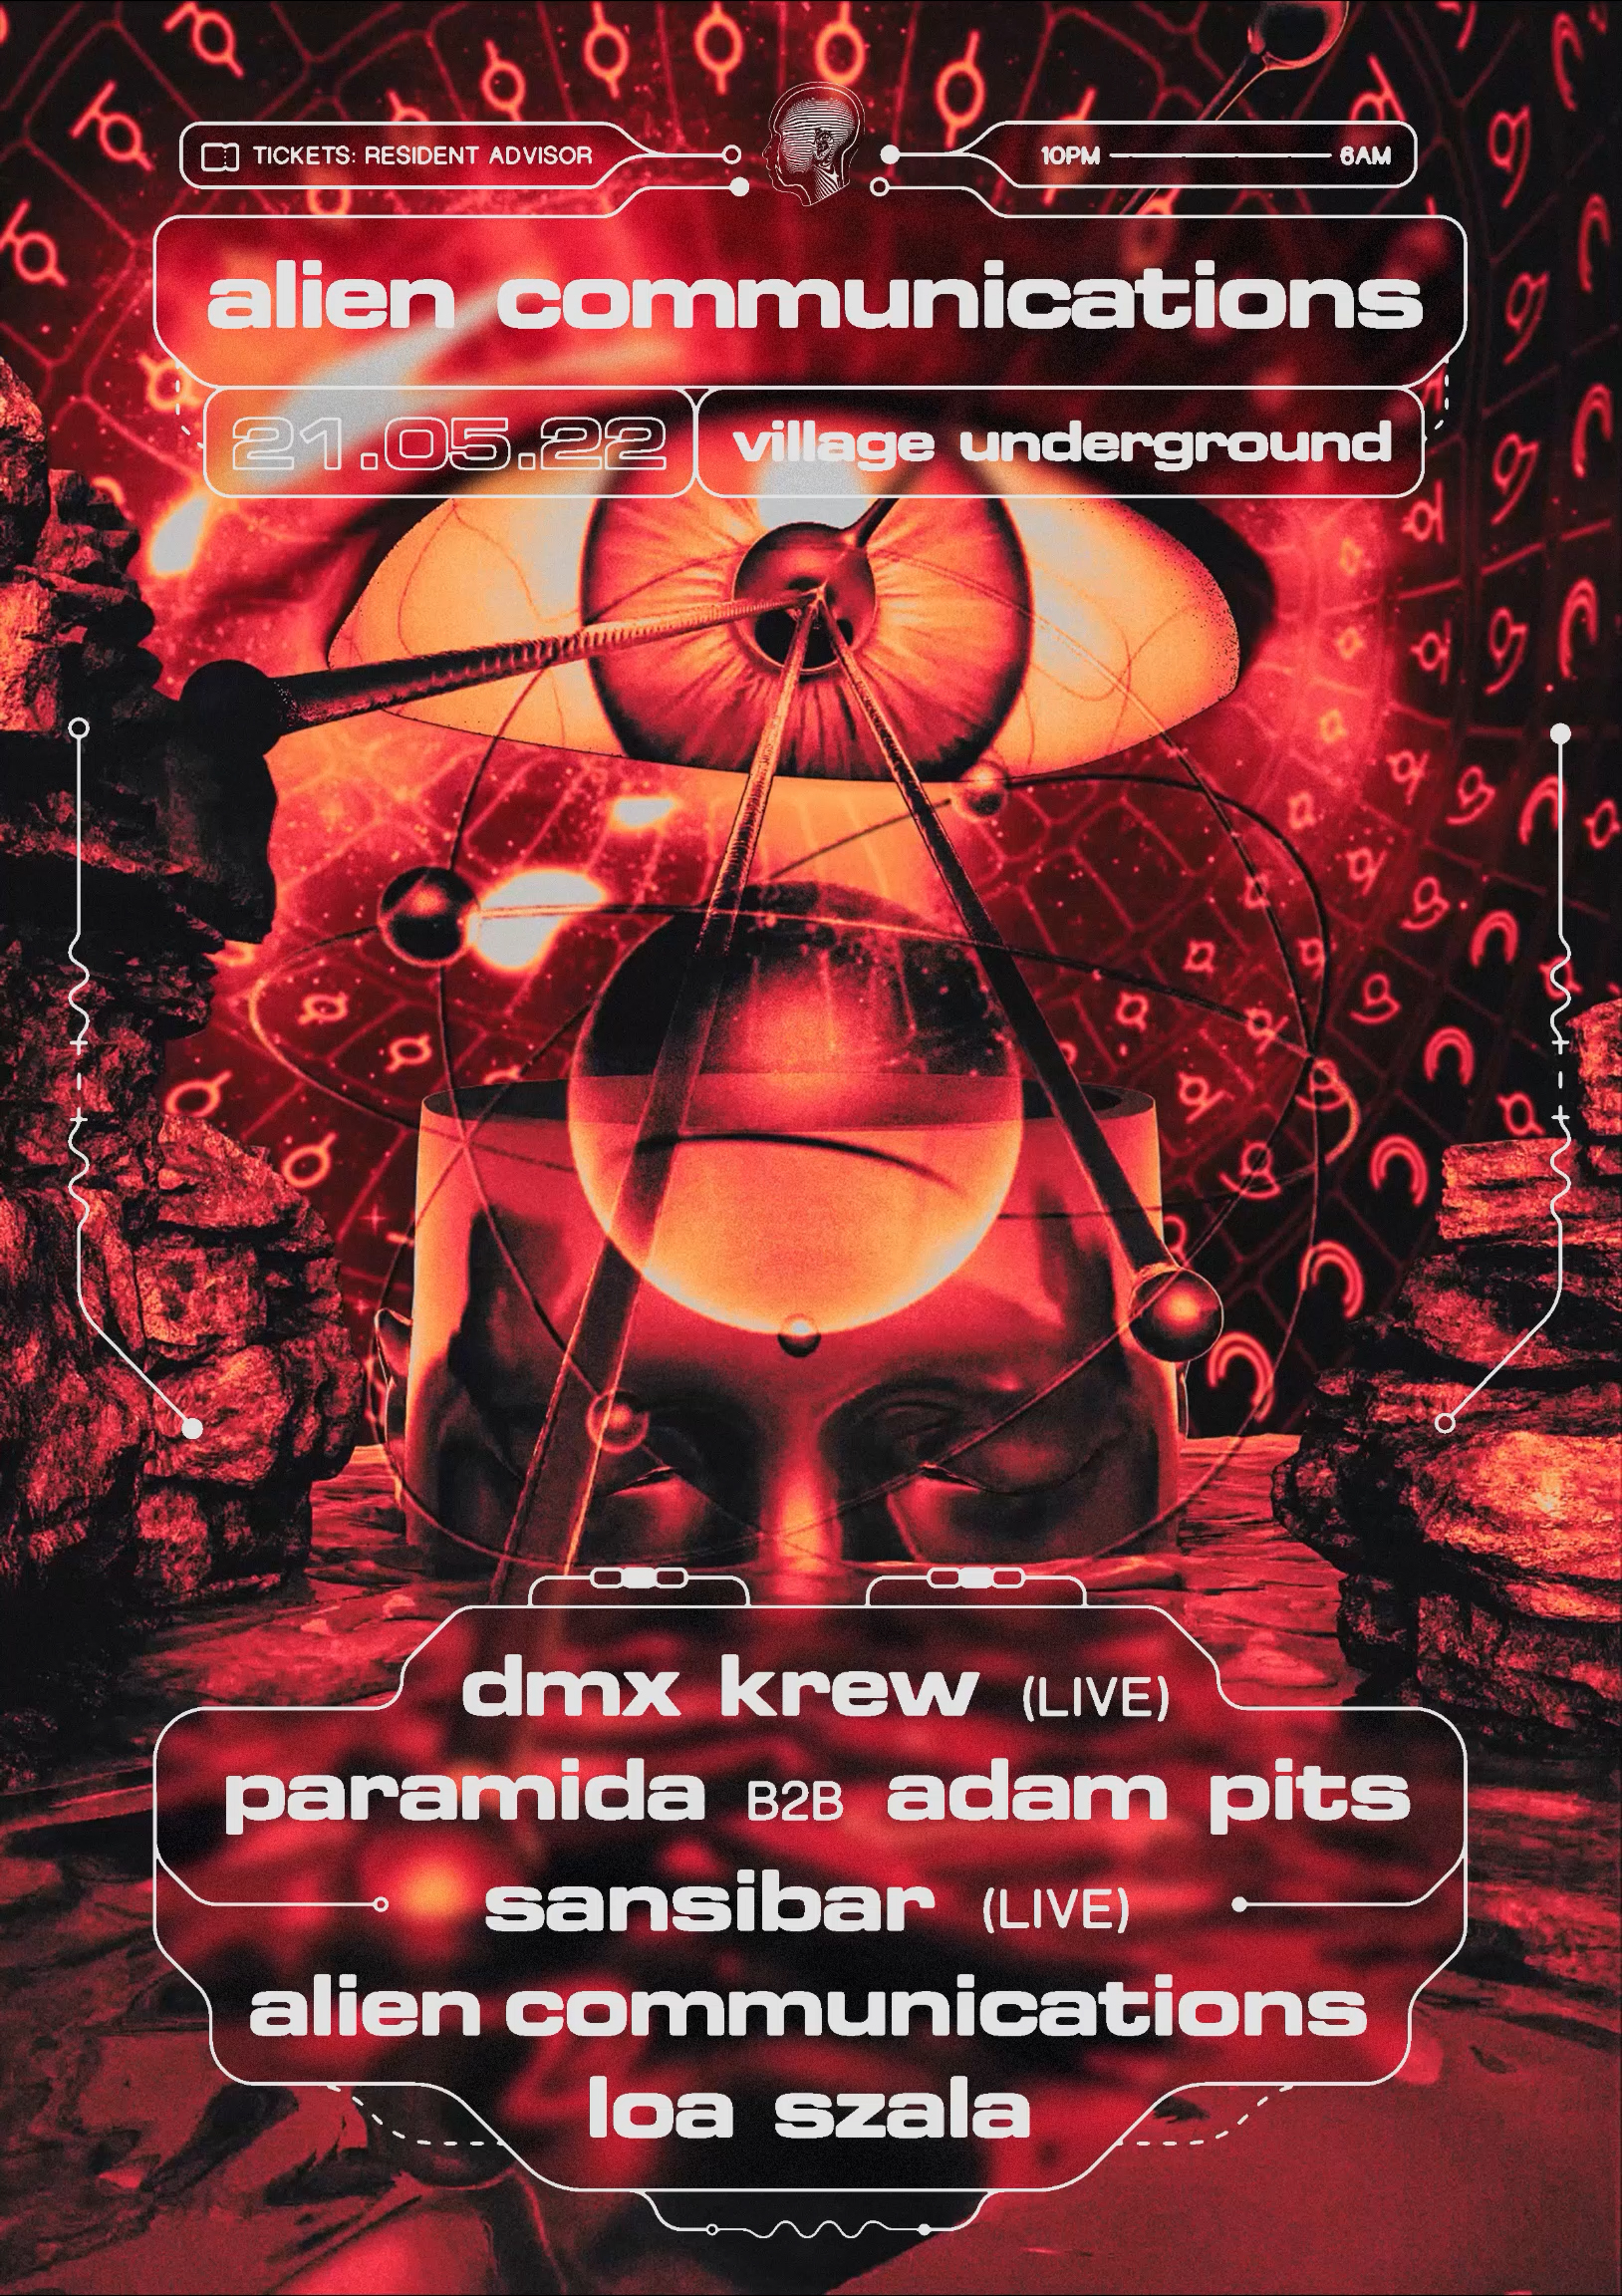 Alien Communications: DMX Krew (live), Paramida b2b Adam Pits, Sansibar (live) - Flyer front